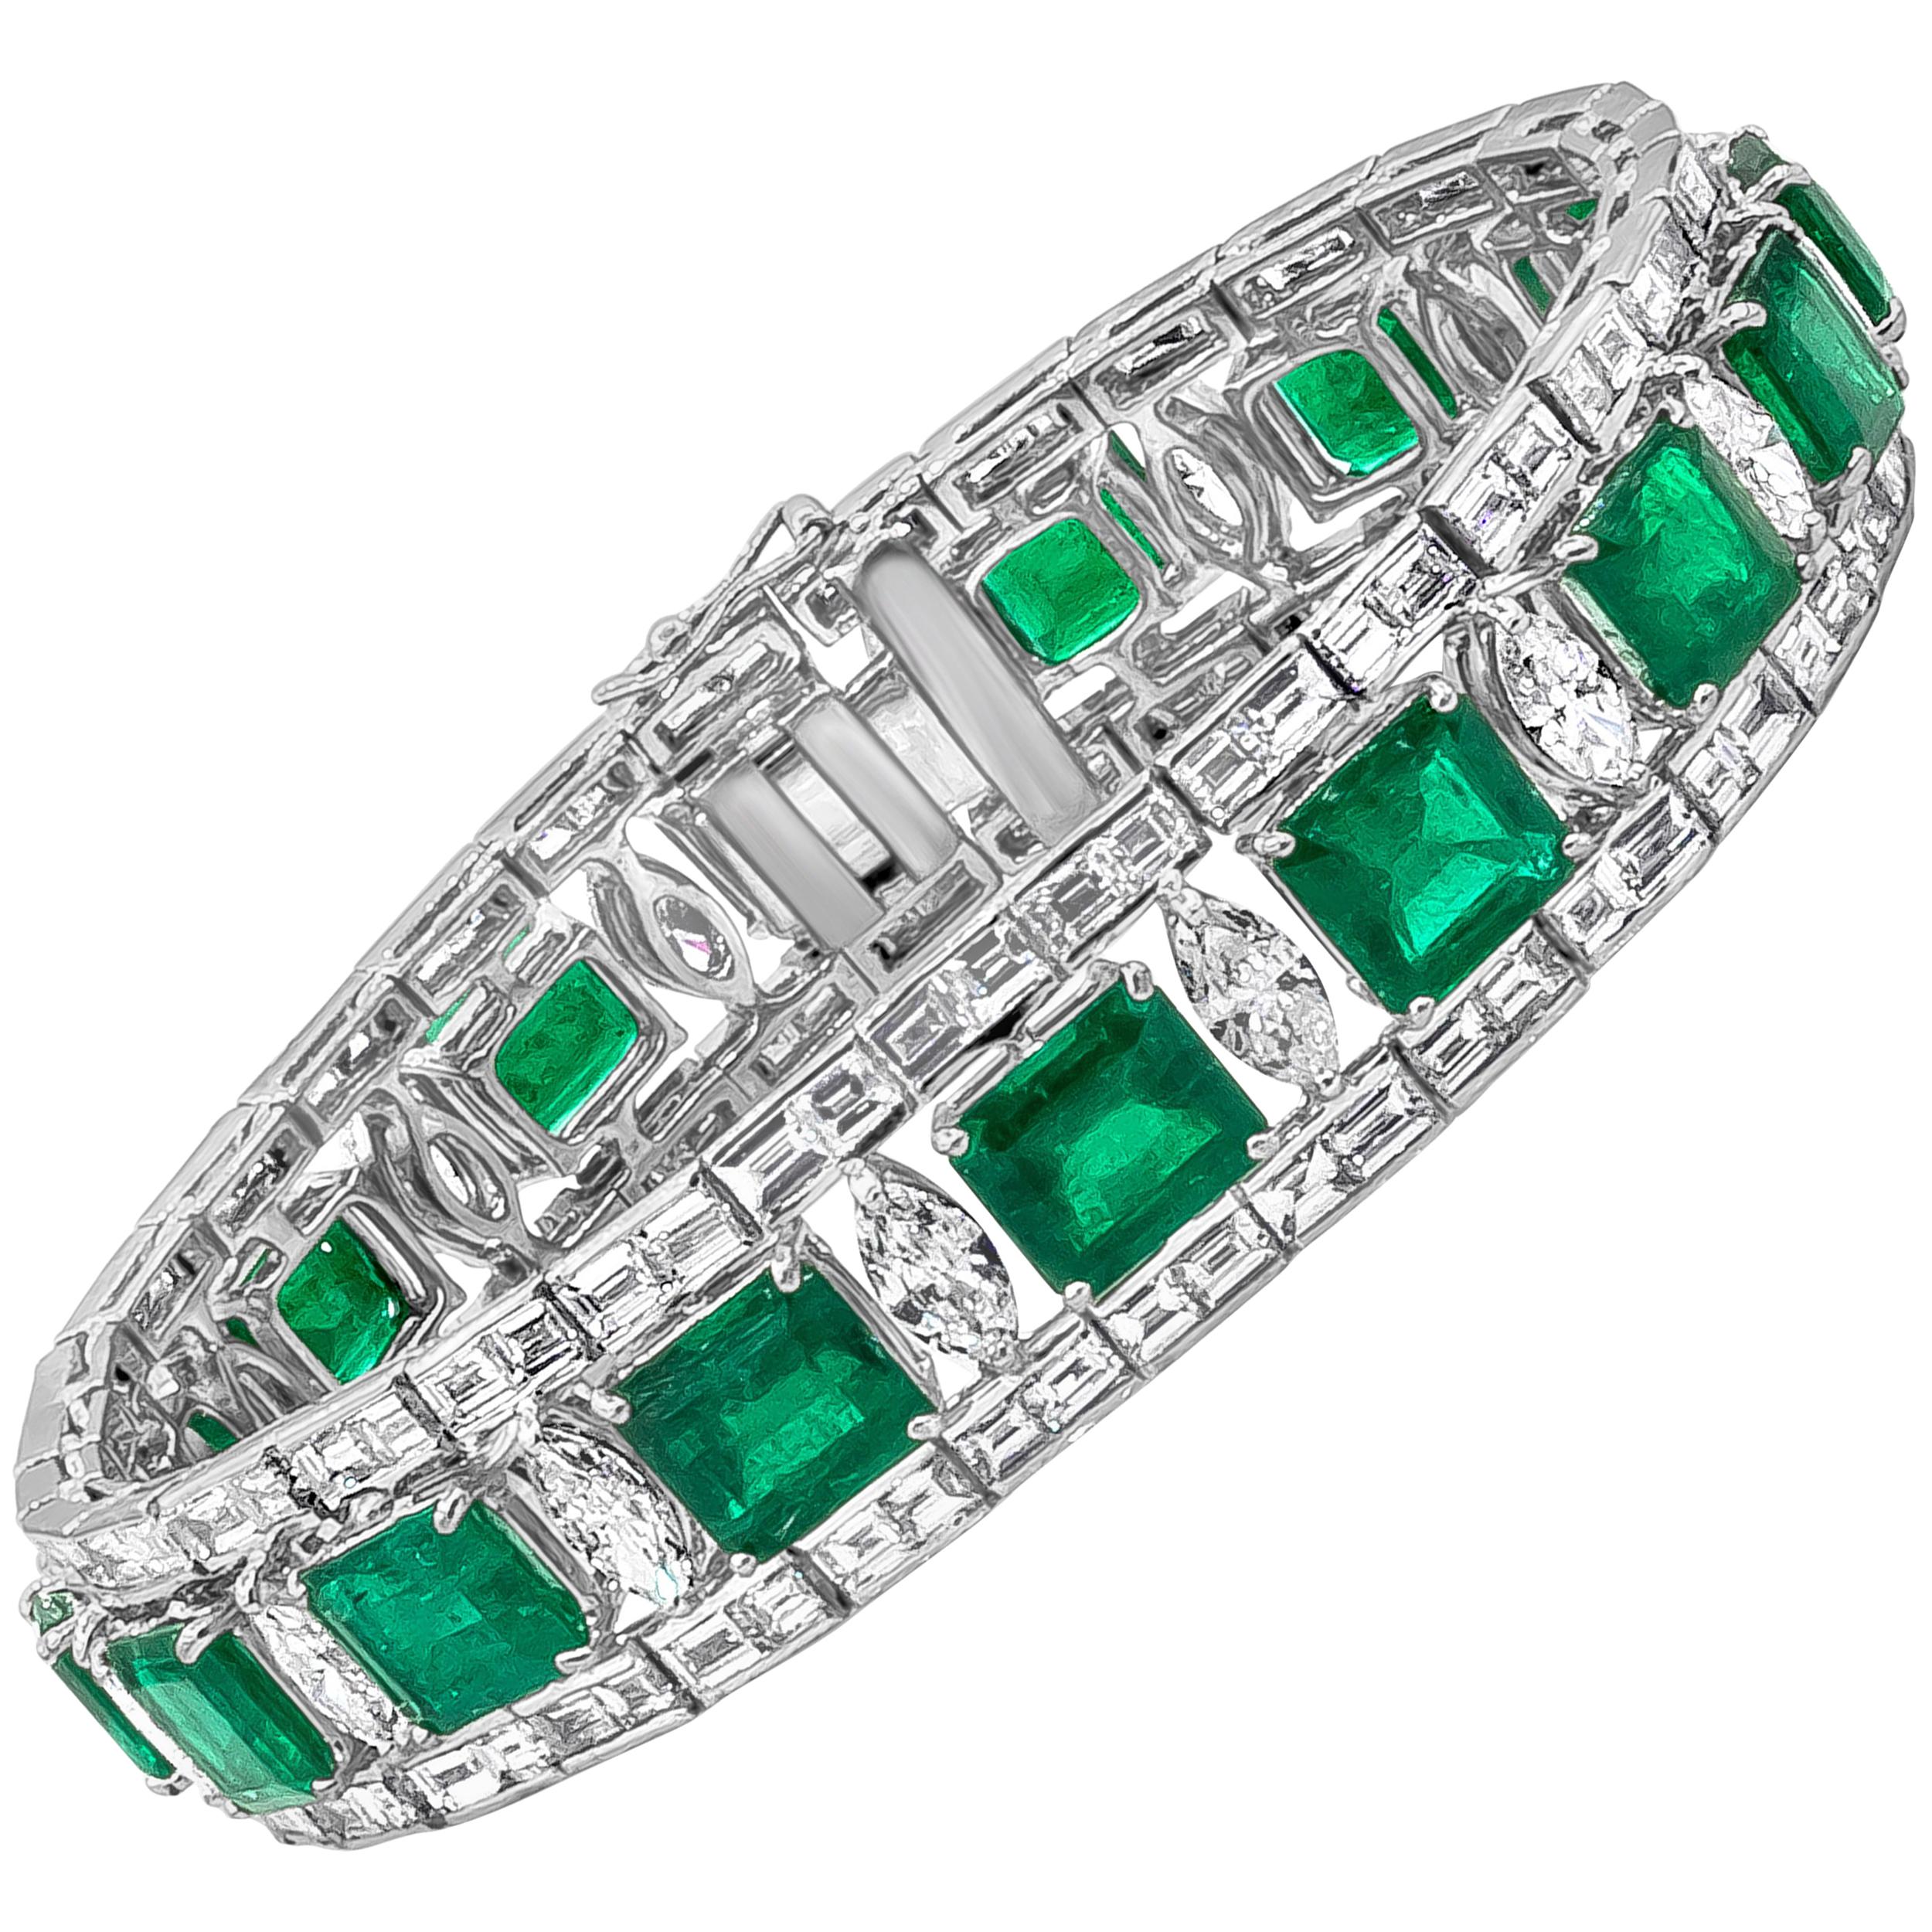 34.49 Carat Total Green Emerald and Mixed Cut White Diamonds Bracelet